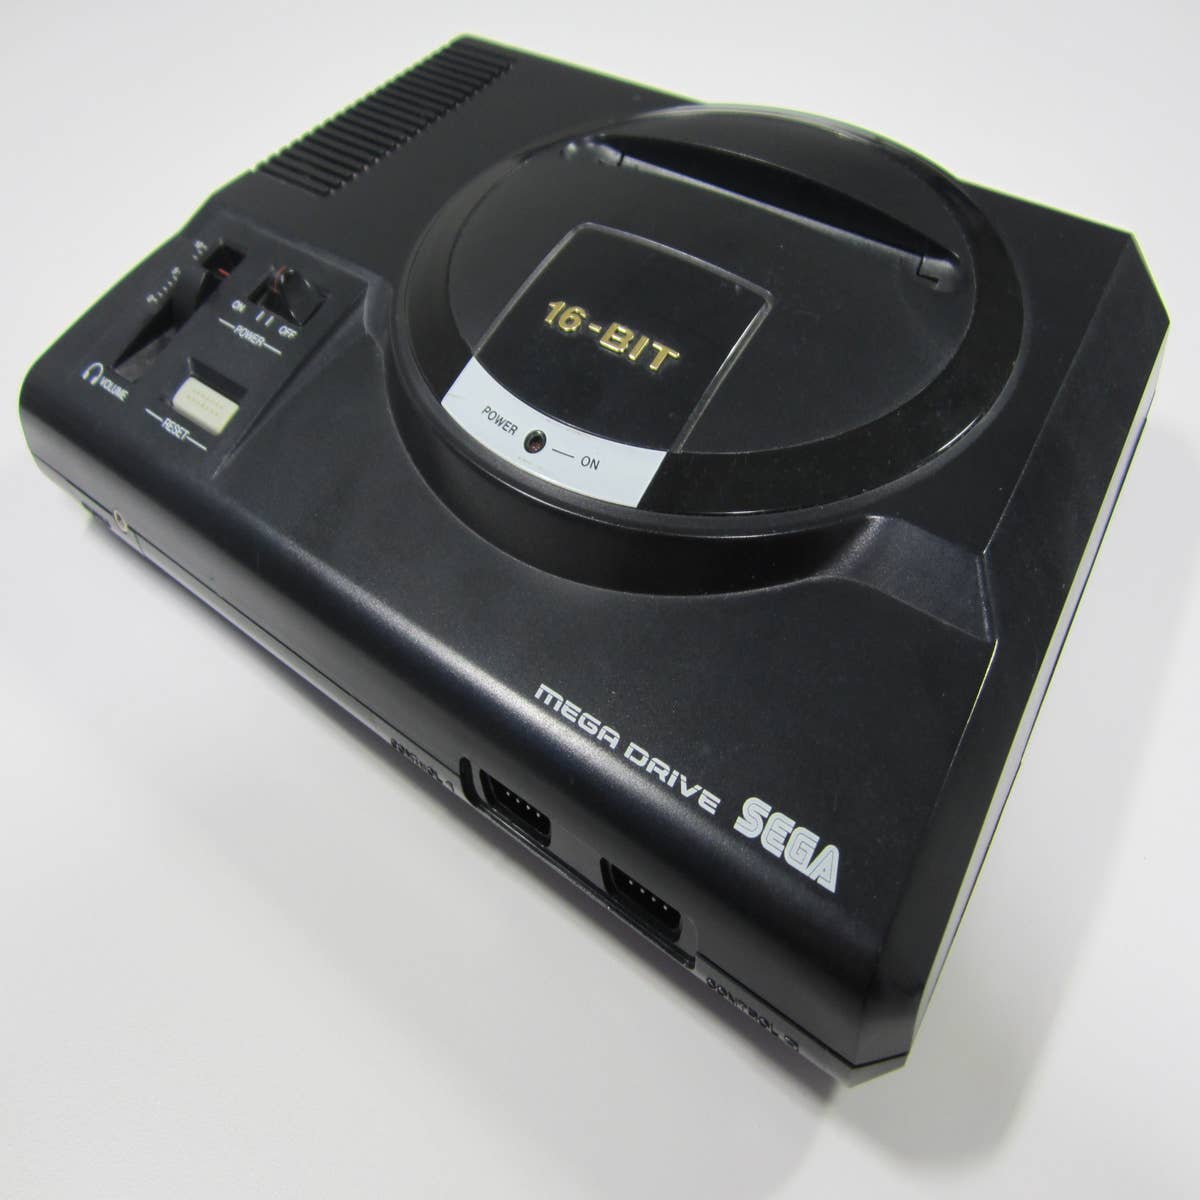 The Story of the Sega Megadrive 4 - A Ridiculous Official Sega